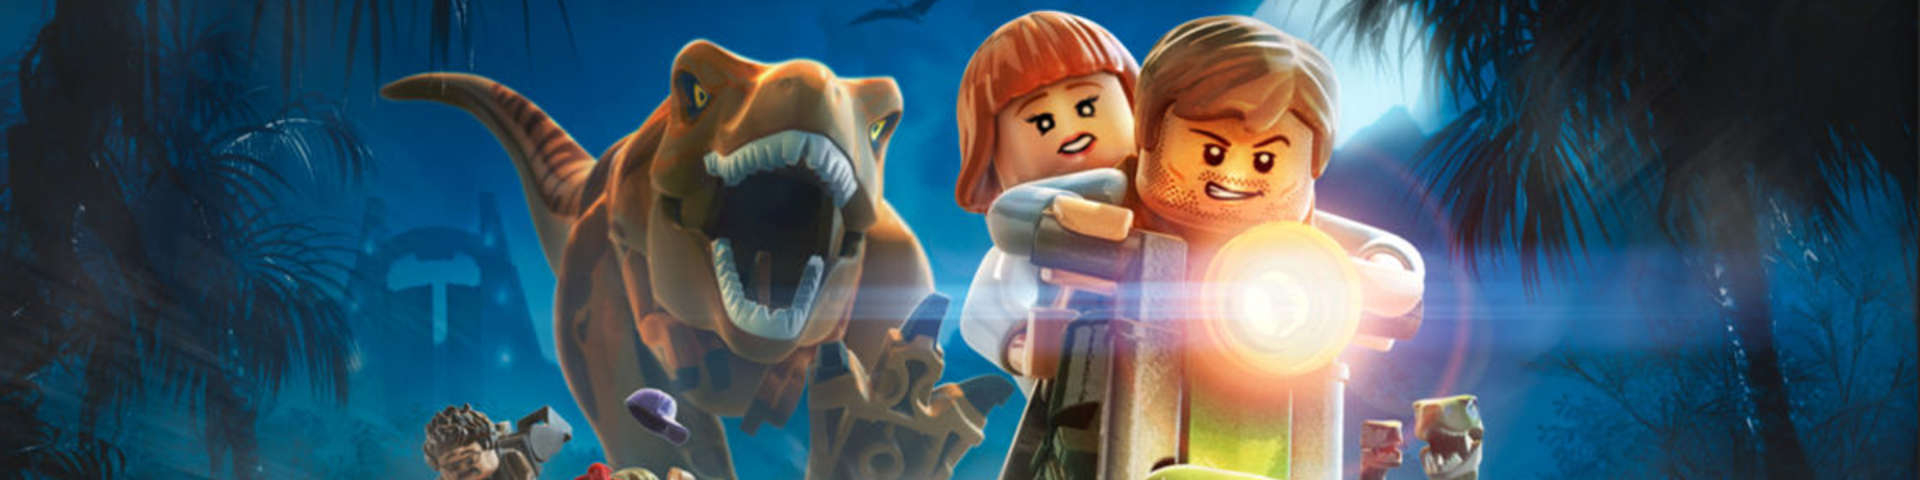 | LEGO World WarnerBros.com Video Jurassic Games |